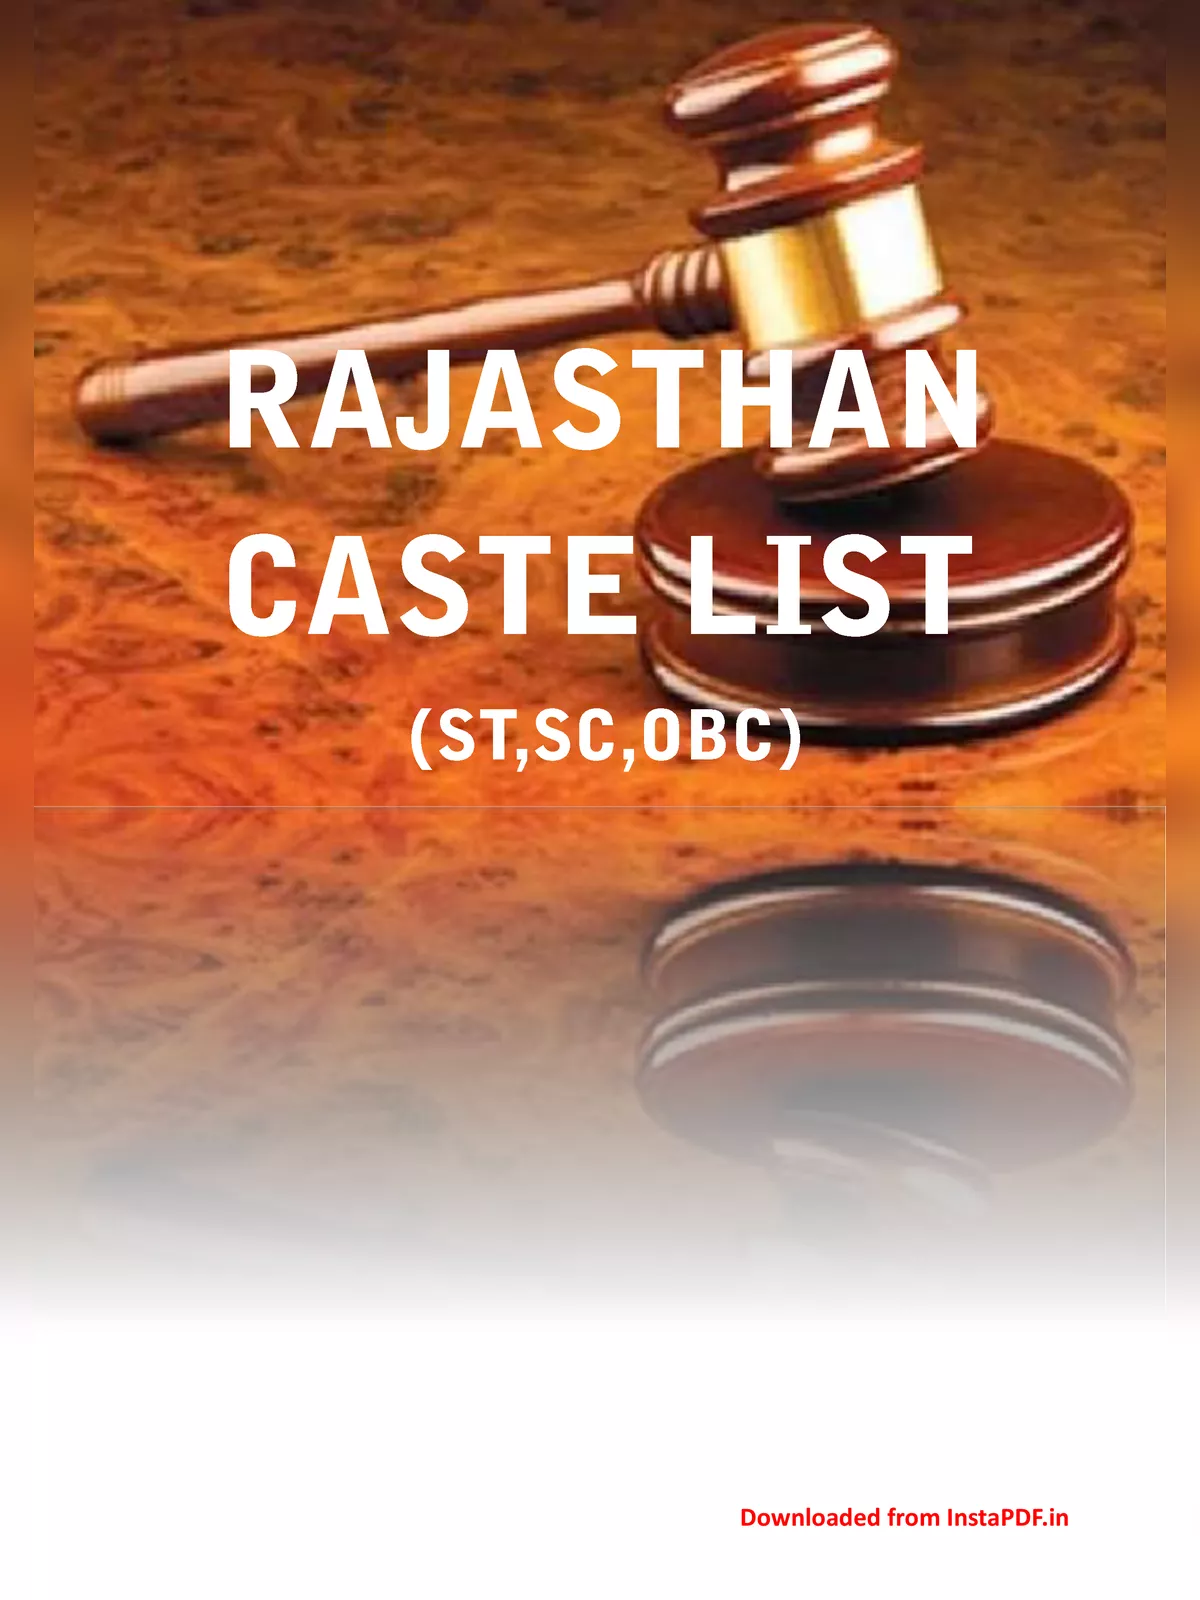 Rajasthan Caste List